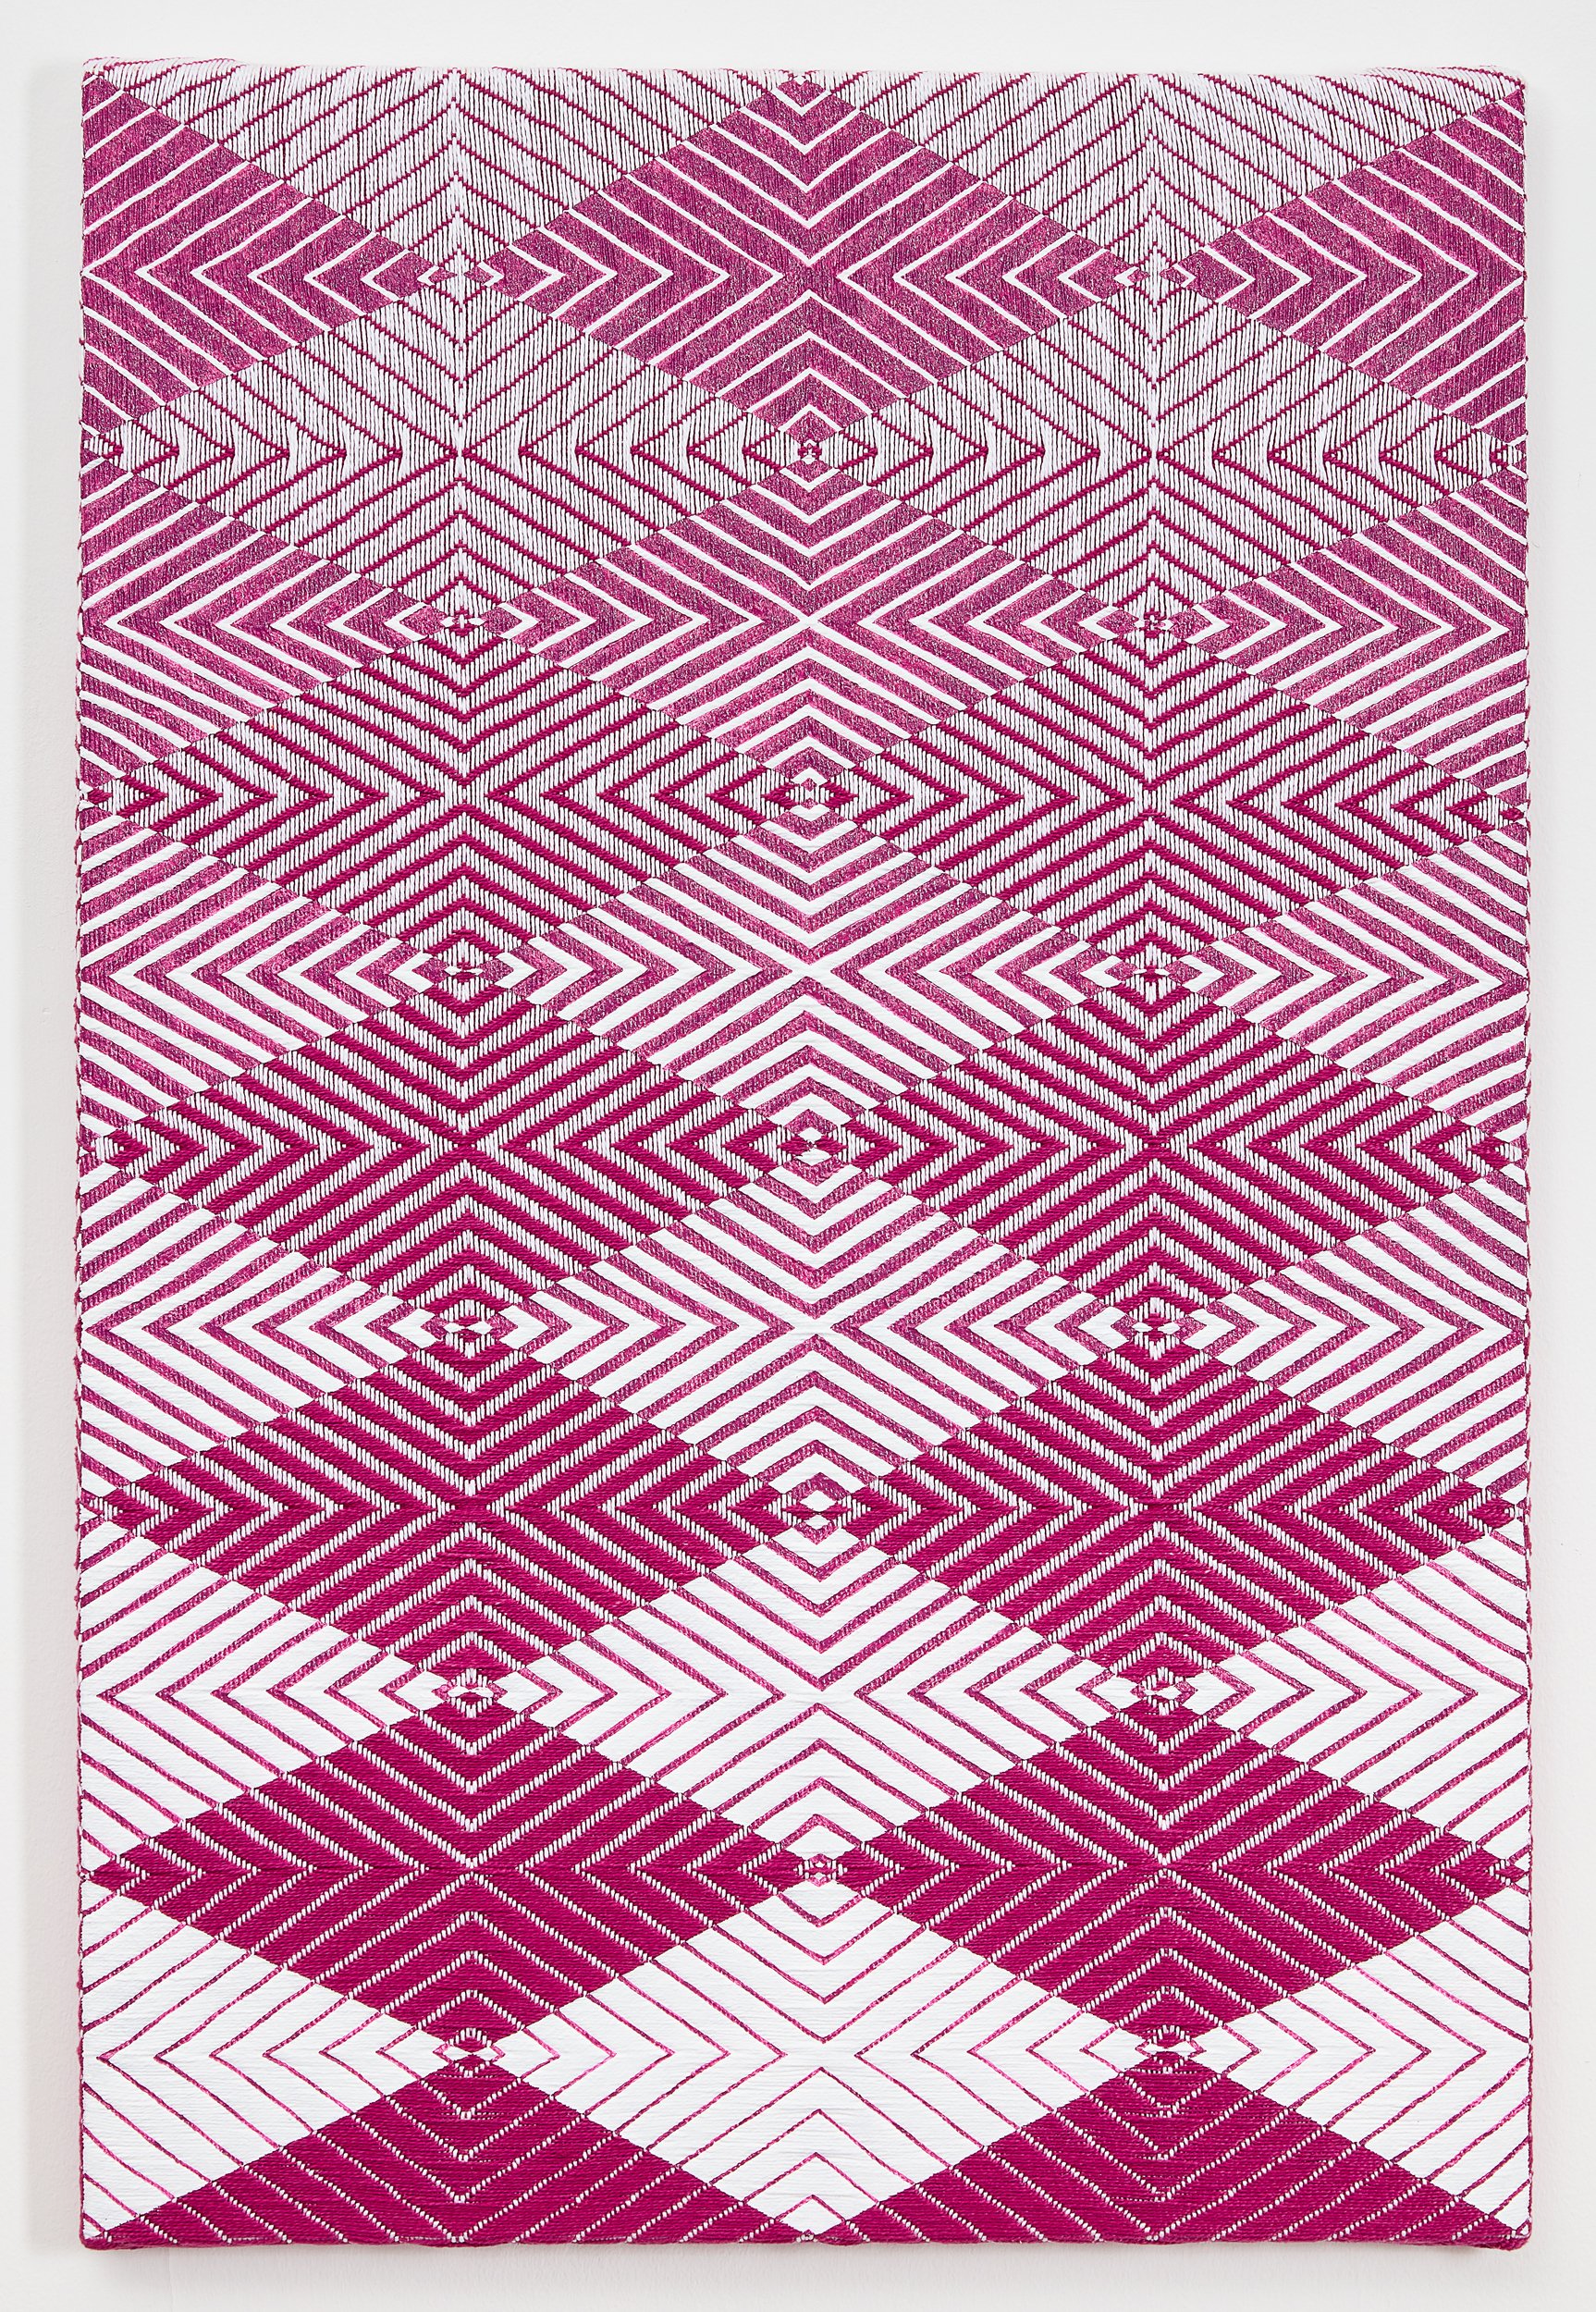 Samantha Bittman, Untitled, 2020, acrylic on hand-woven textile, 30 x 20 in, 76.2 x 50.8 cm, (SBi302531) LR